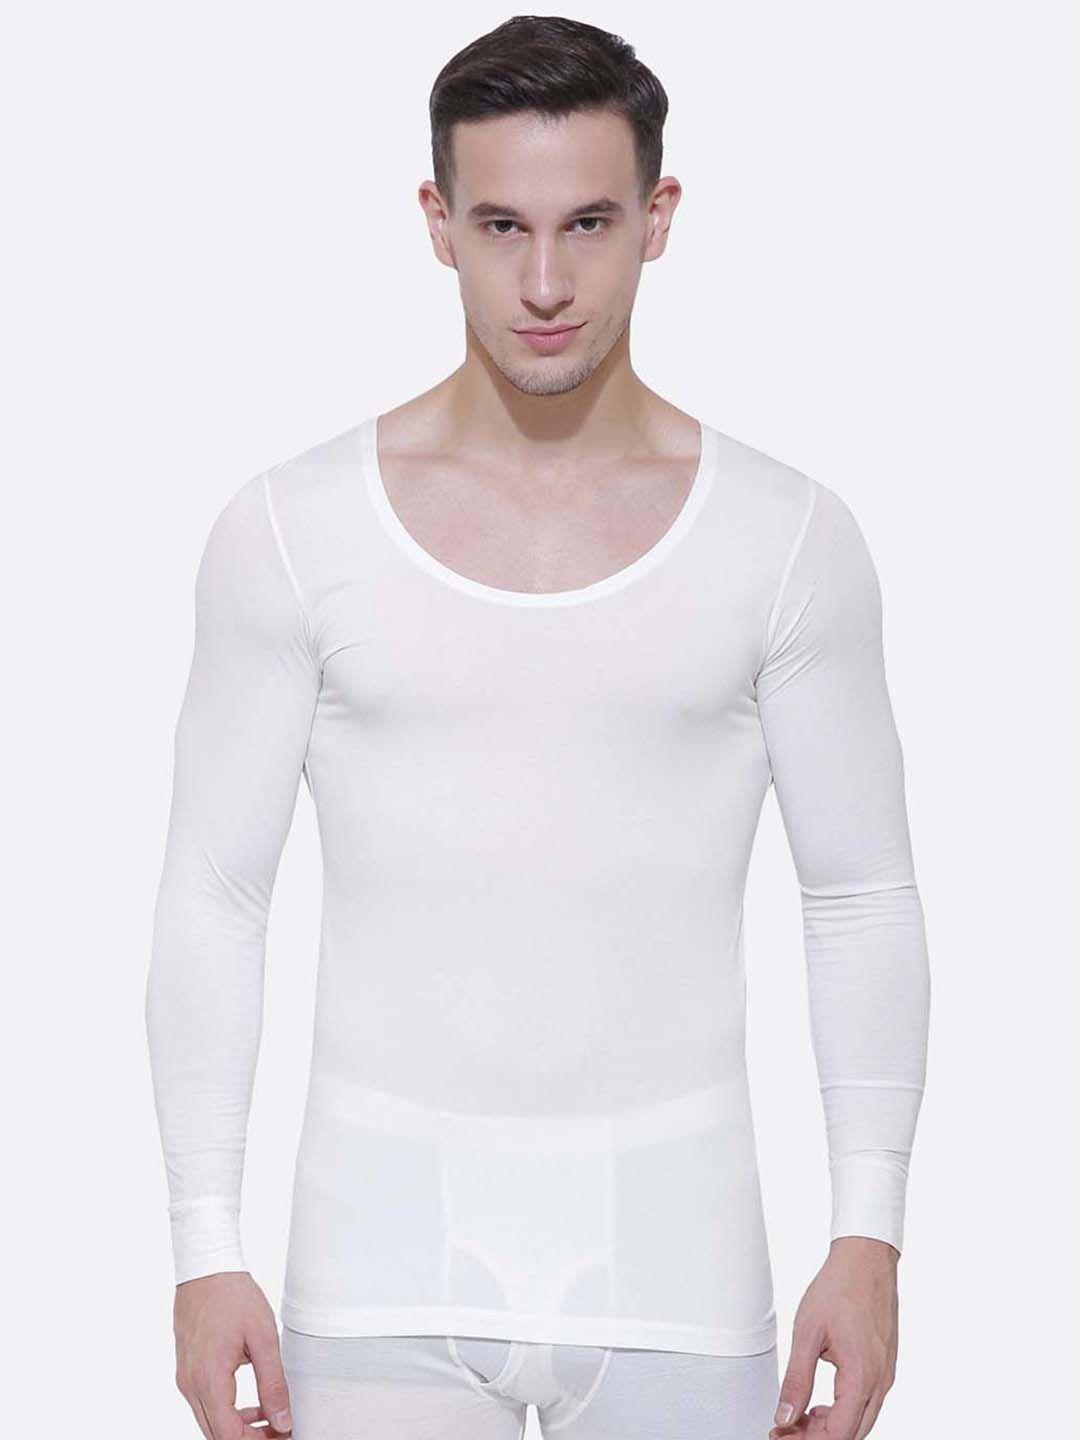 bodycare insider men off white cotton thermal tshirt